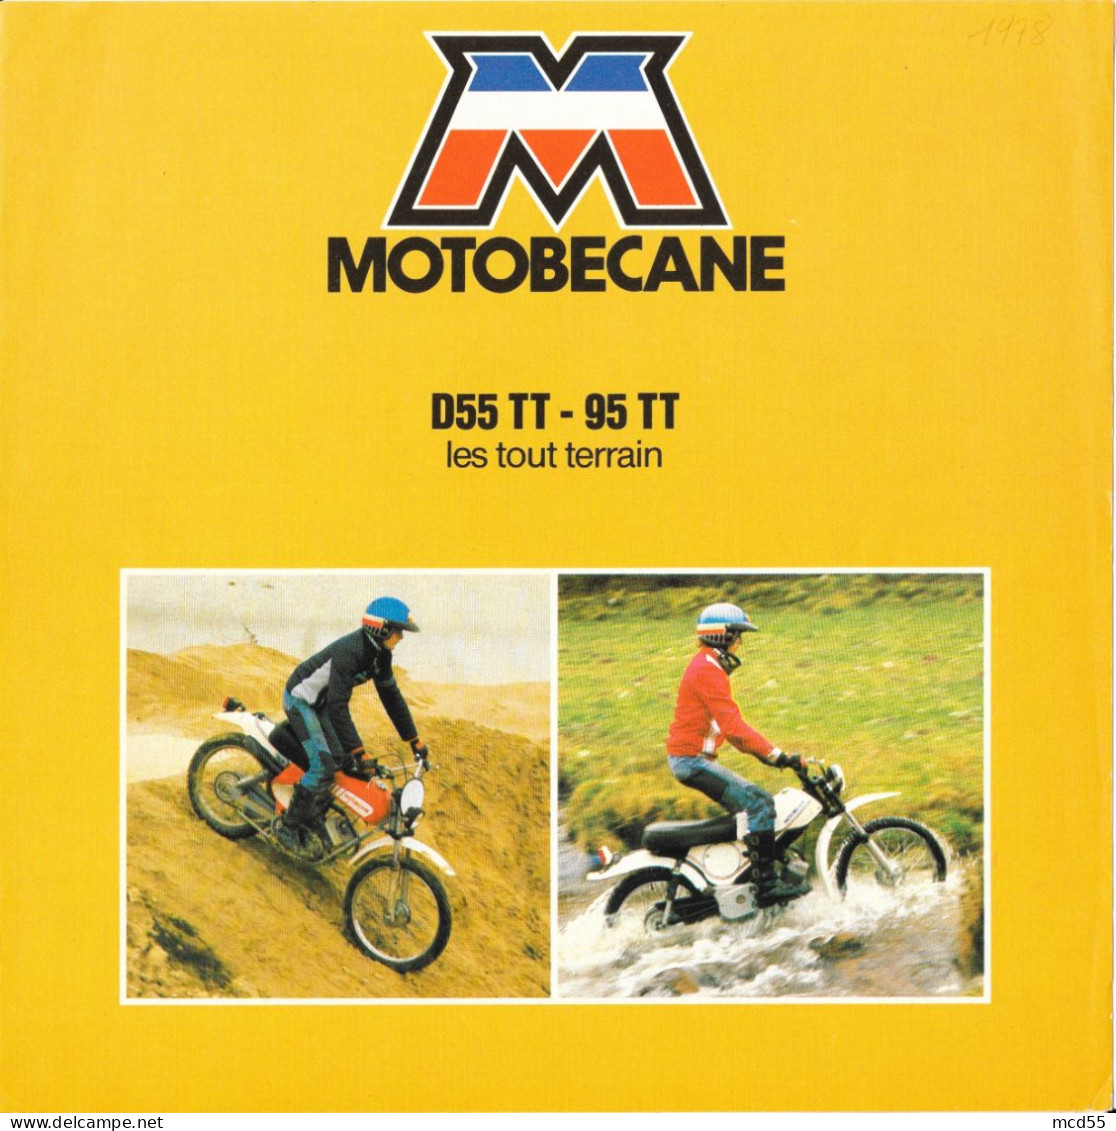 MOTOBECANE - MOBYLETTE - MOTOCONFORT - Modele D 55 TT -  95 TT Les Tout Terrain " Etablissement THENET - 93 Montreuil " - Advertising